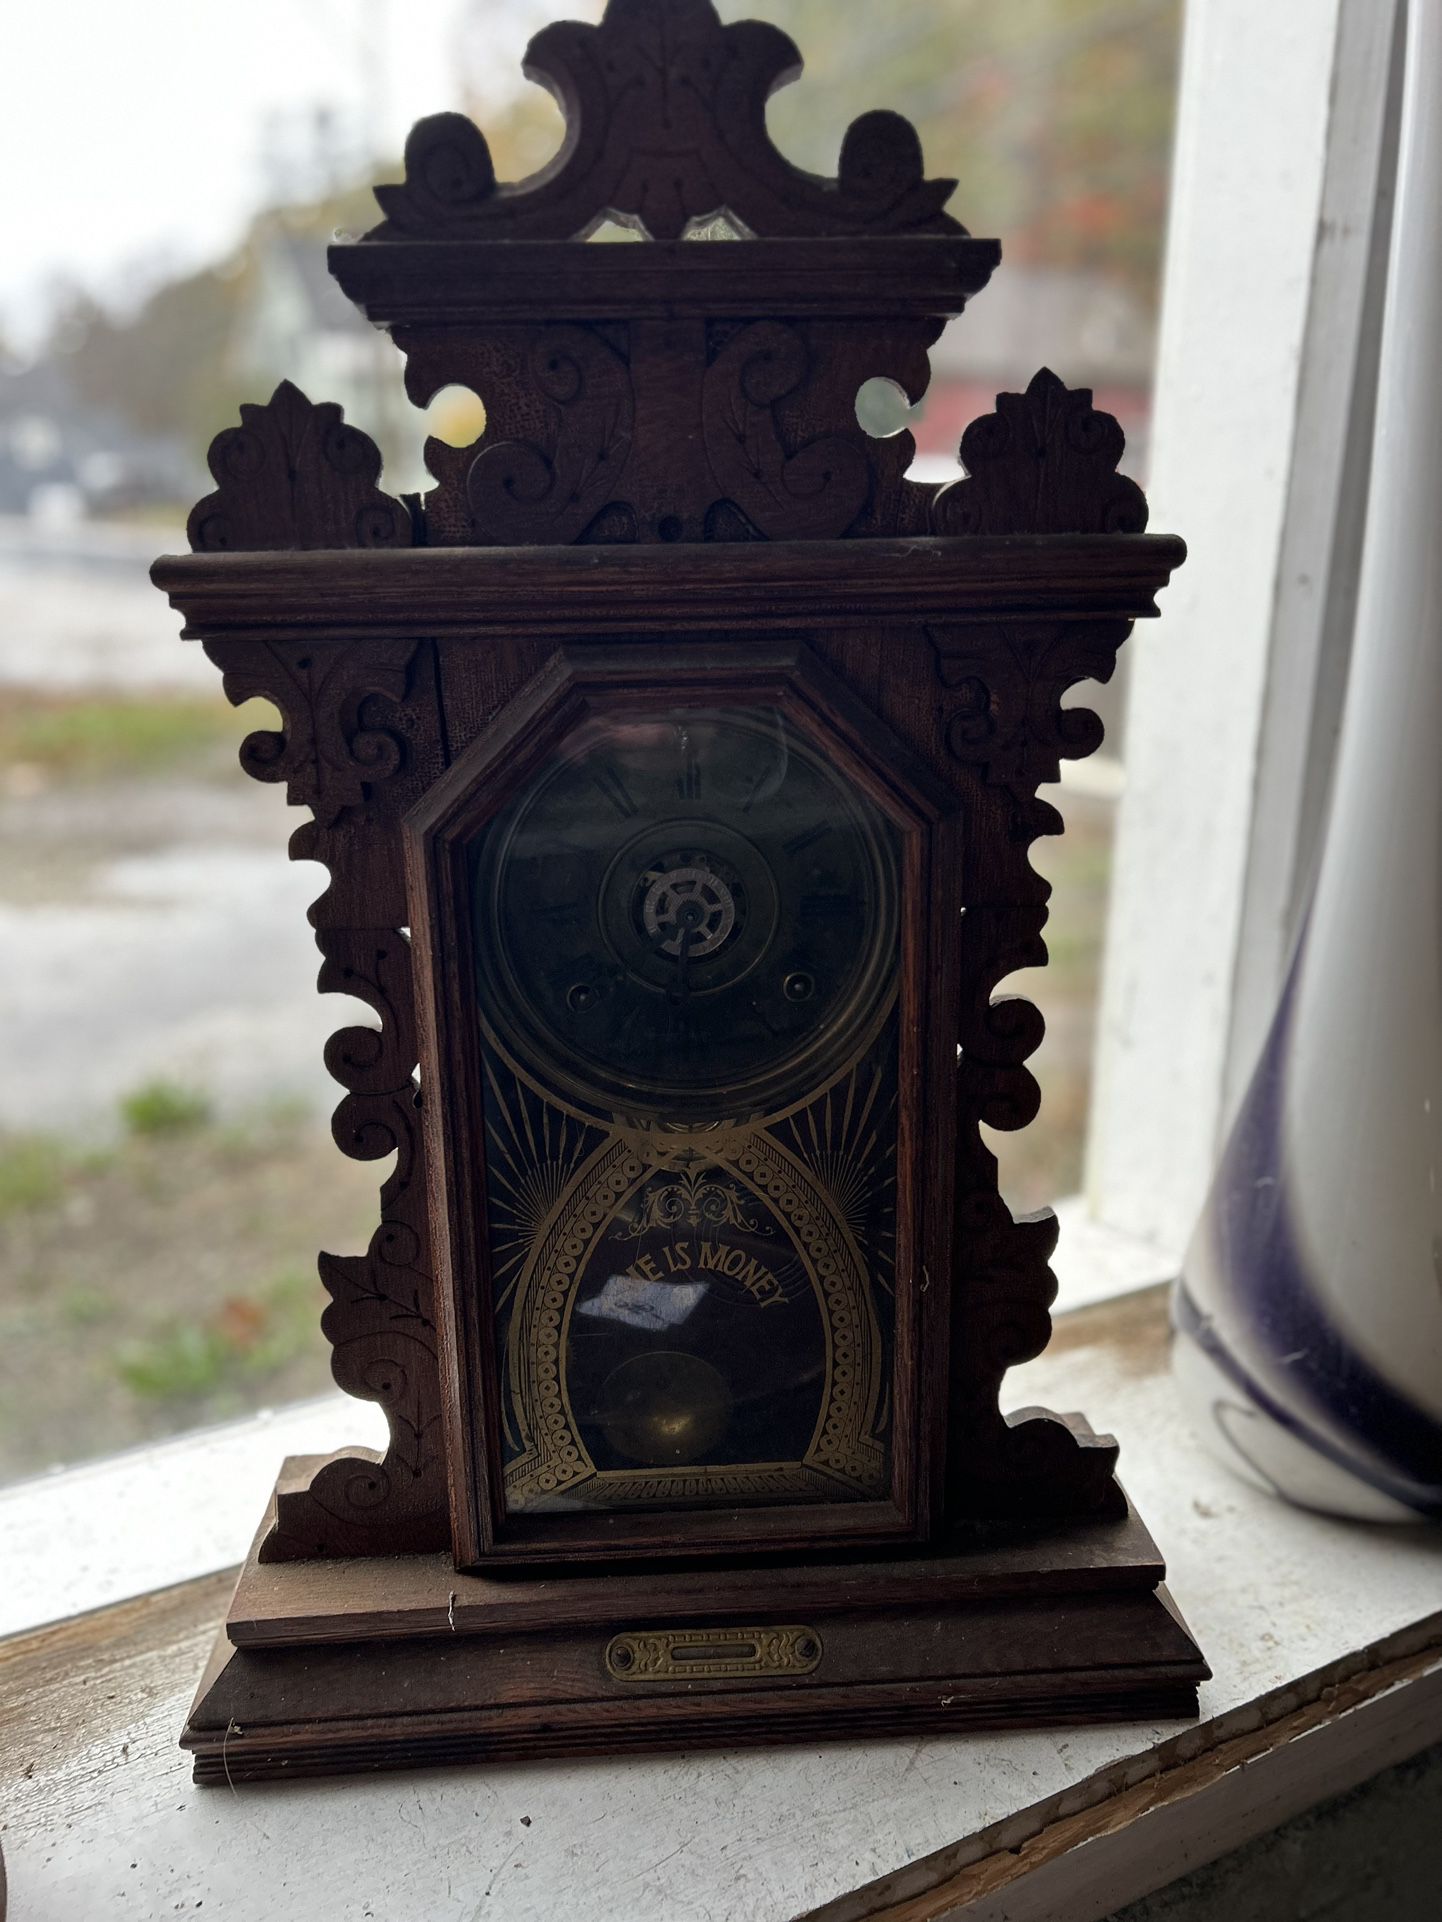 Antique Mantle Clock 